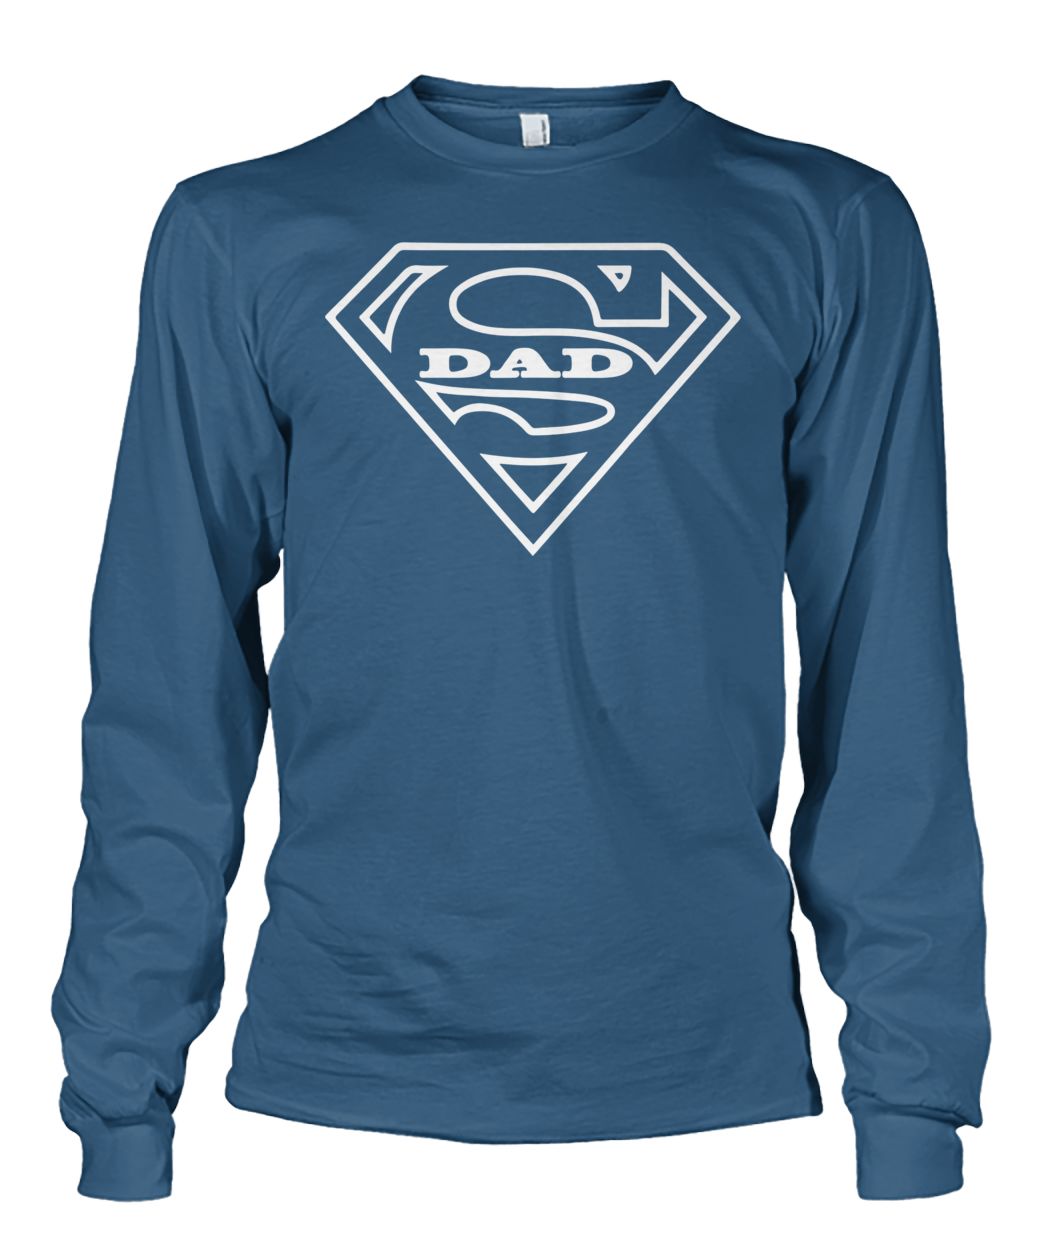 Super dad superman logo unisex long sleeve